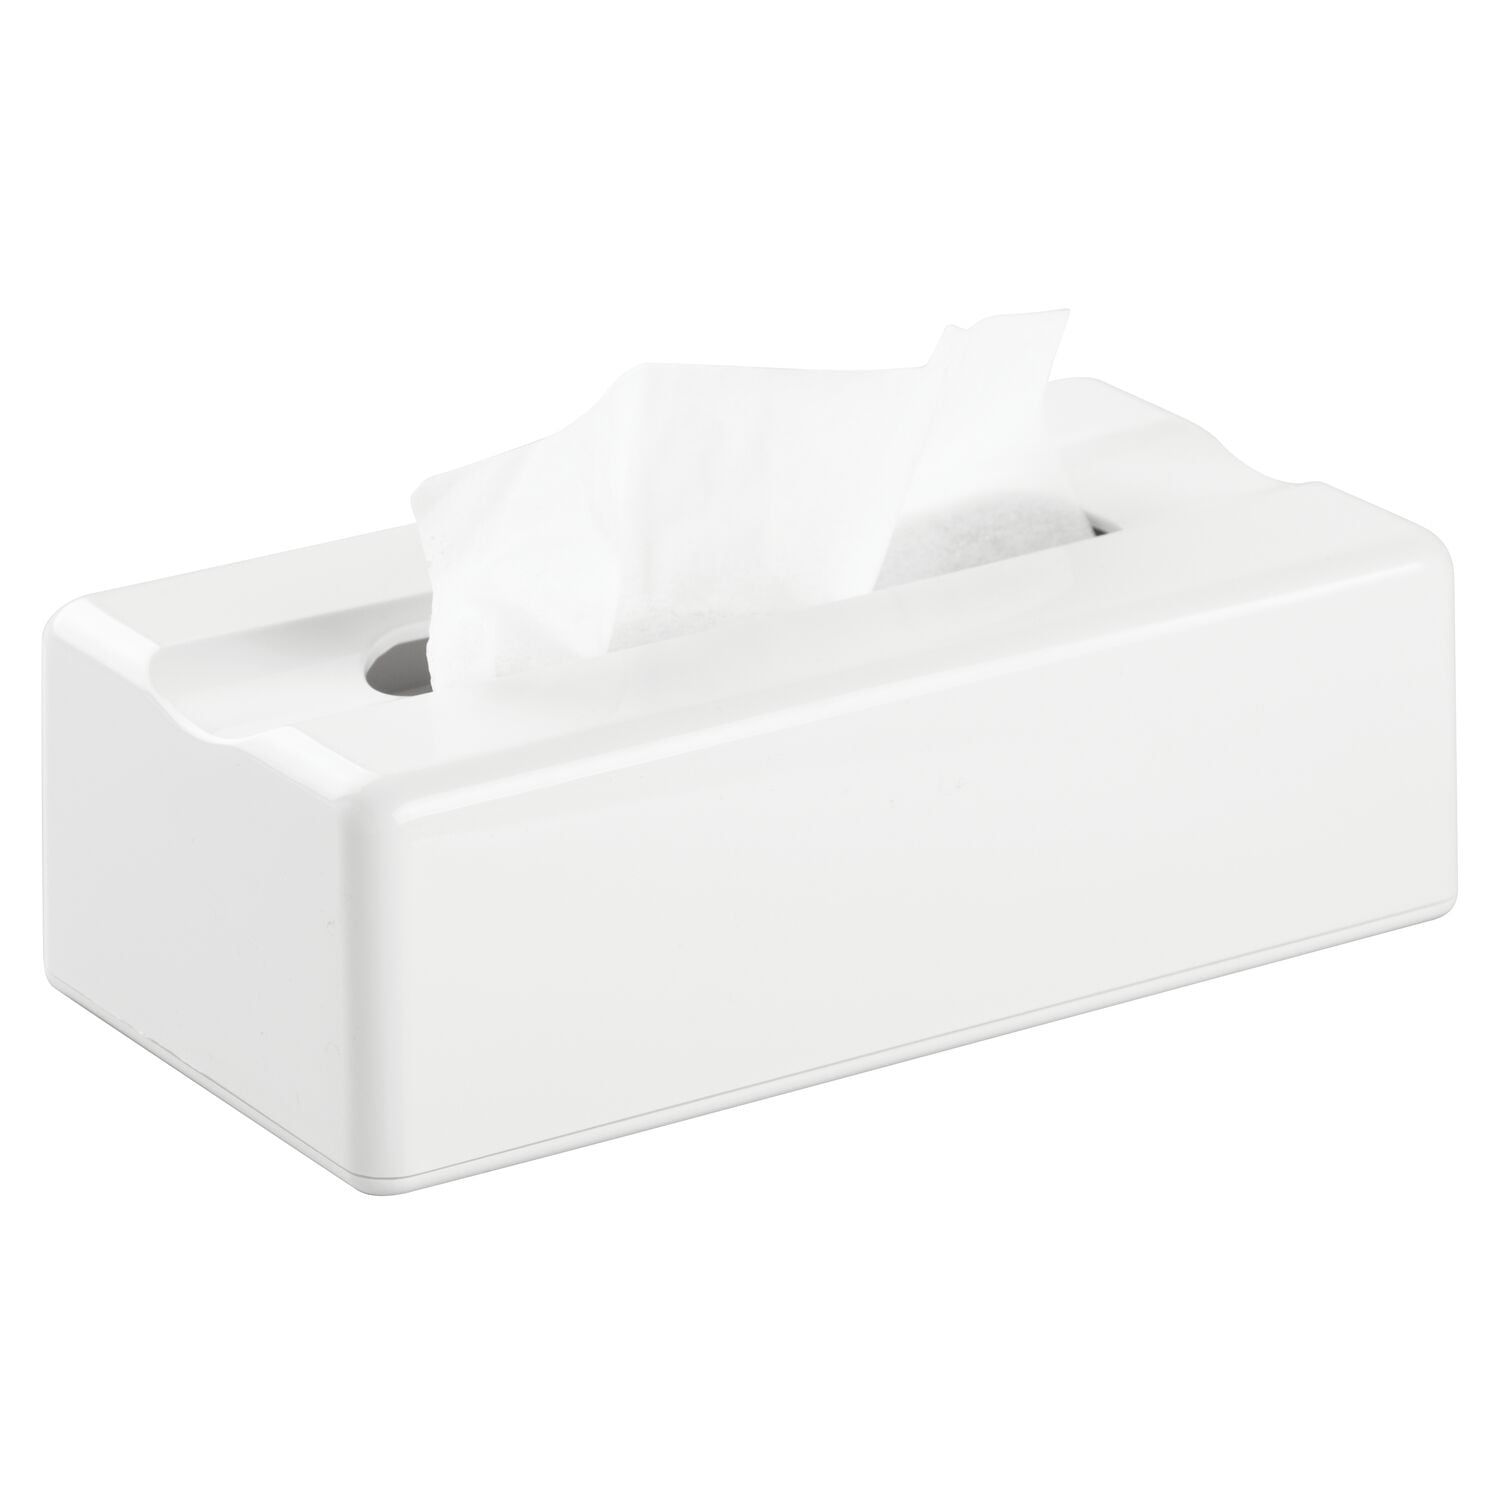 IMIKEYA Easter Stone Man Shape Tissue Box Paper Facial Tissue Box Cover Holder for Bathroom Vanity Countertops Bedroom Dressers Beige